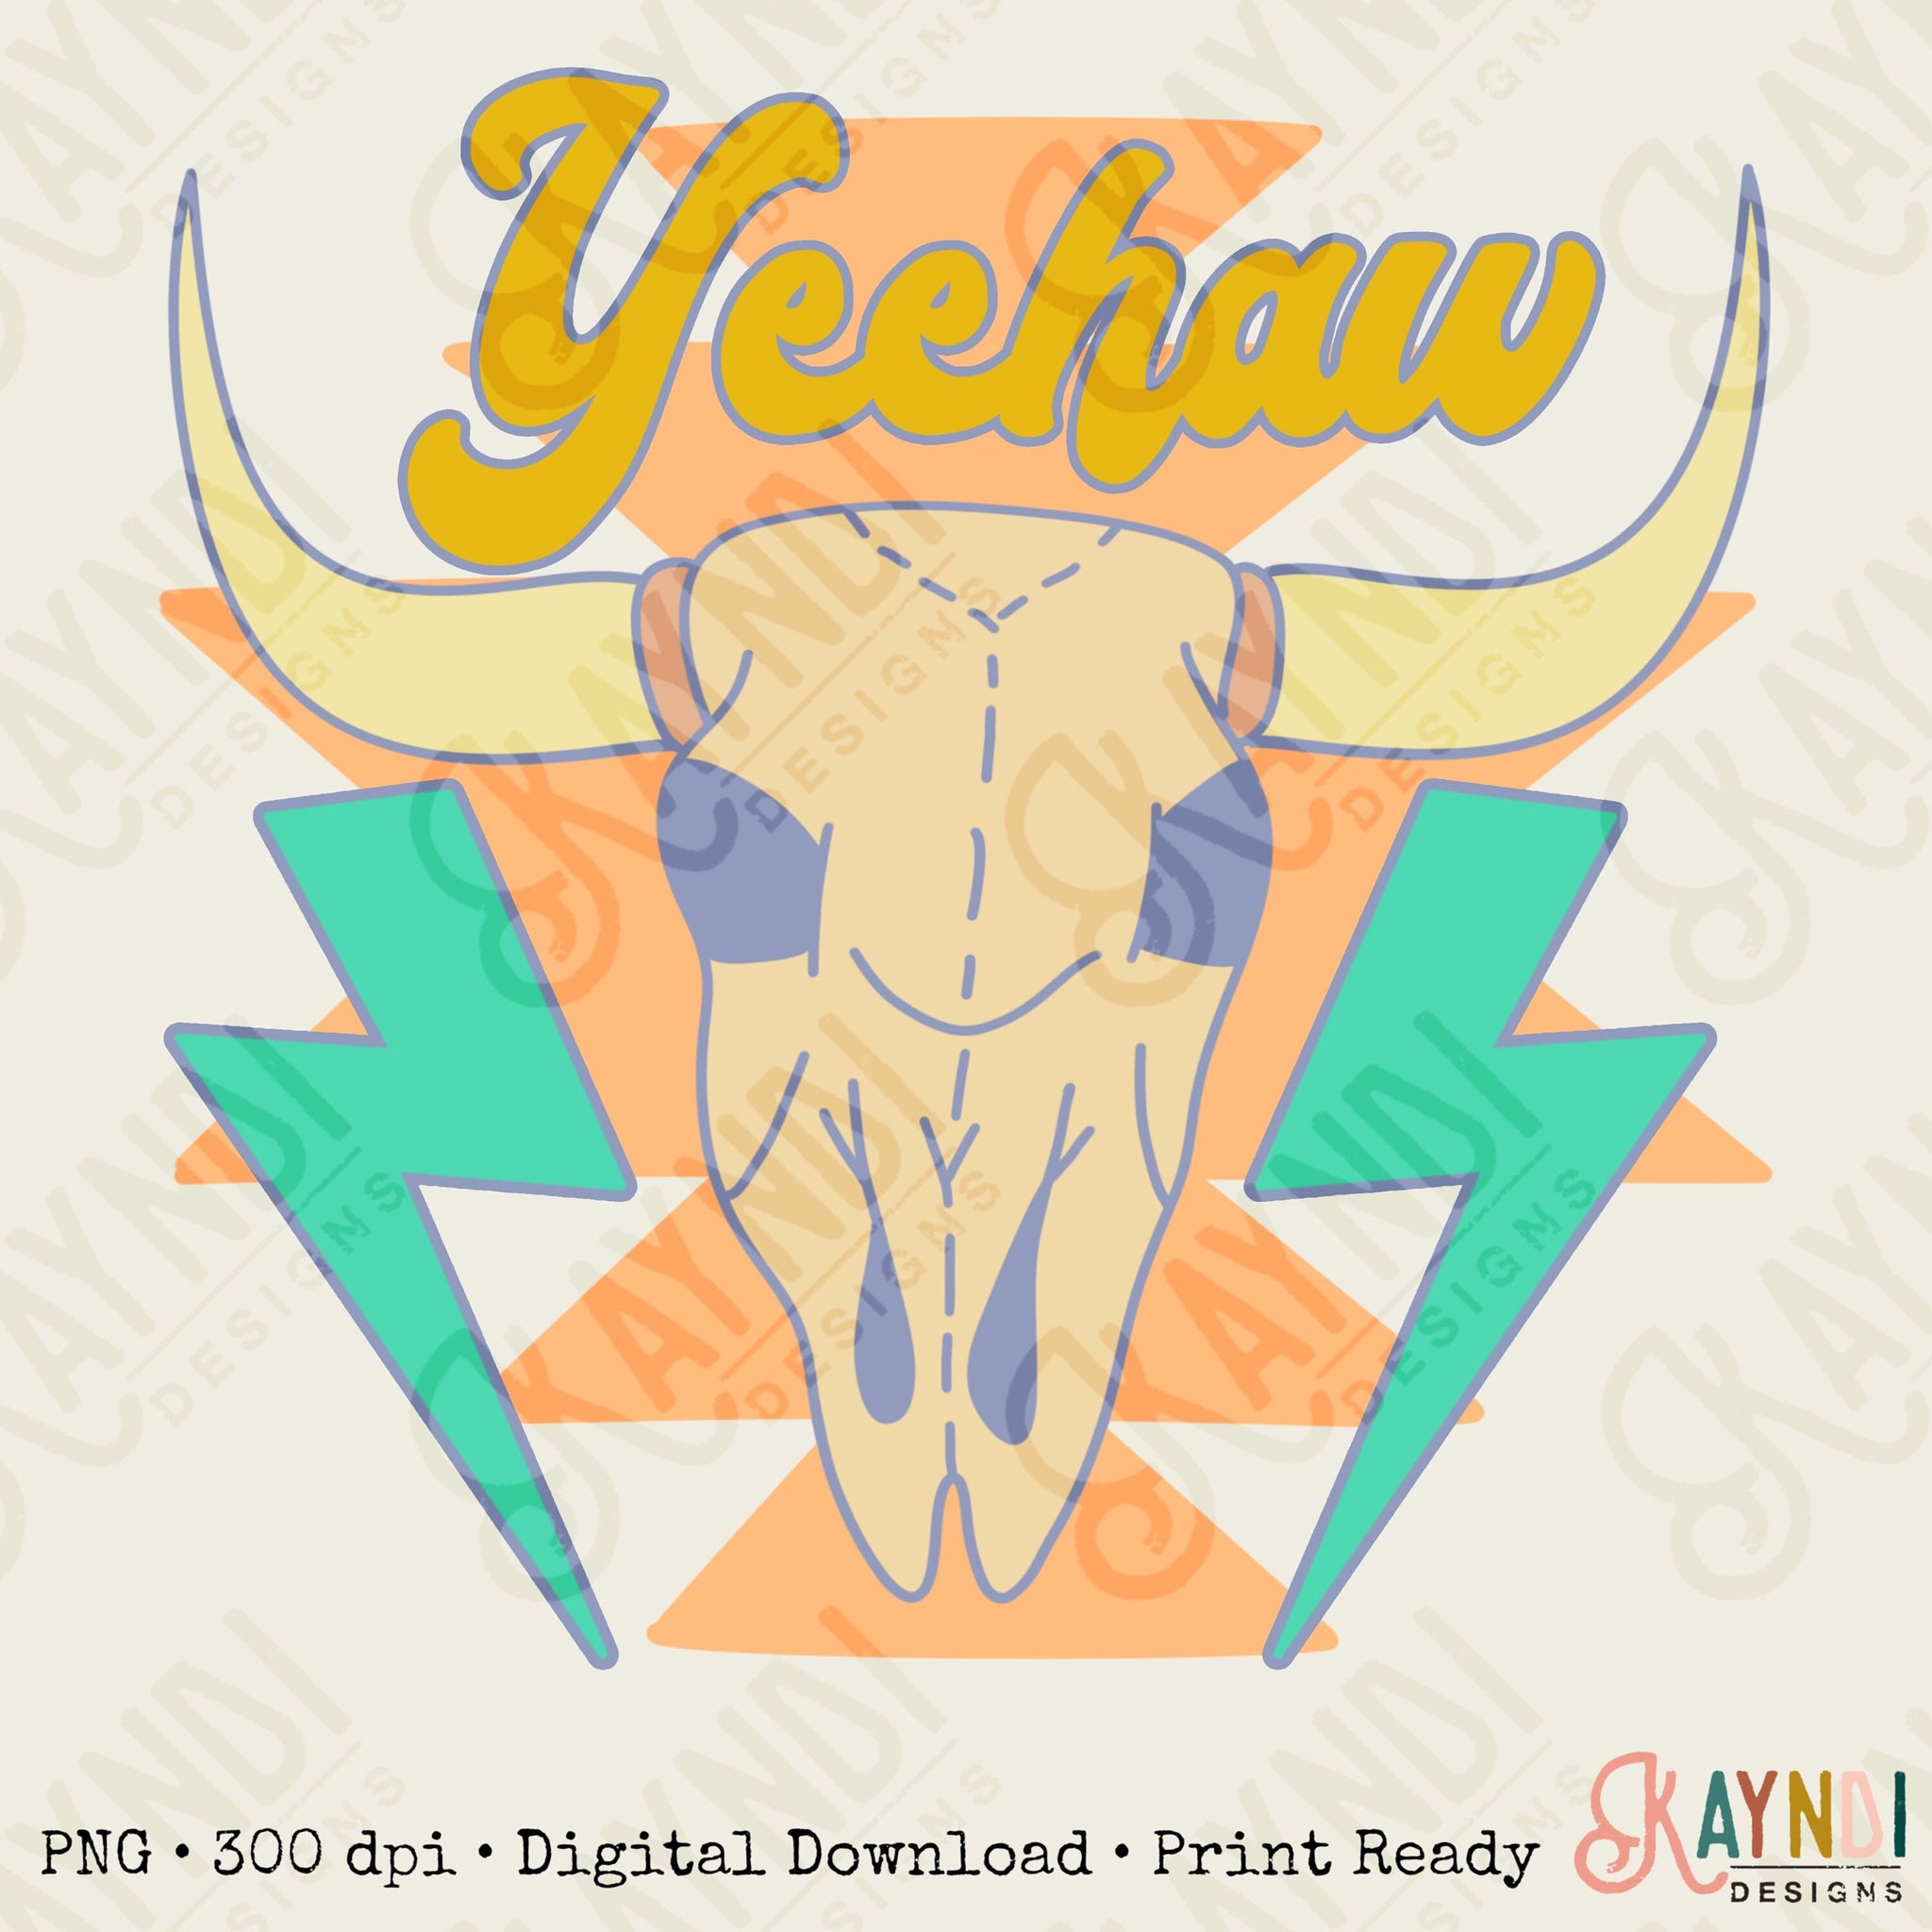 YeeHaw Sublimation Design PNG Digital Download Printable Yee Haw Steer Bull Cow Skull Skeleton Retro Groovy Boho Western Rodeo Cowgirl Aztec